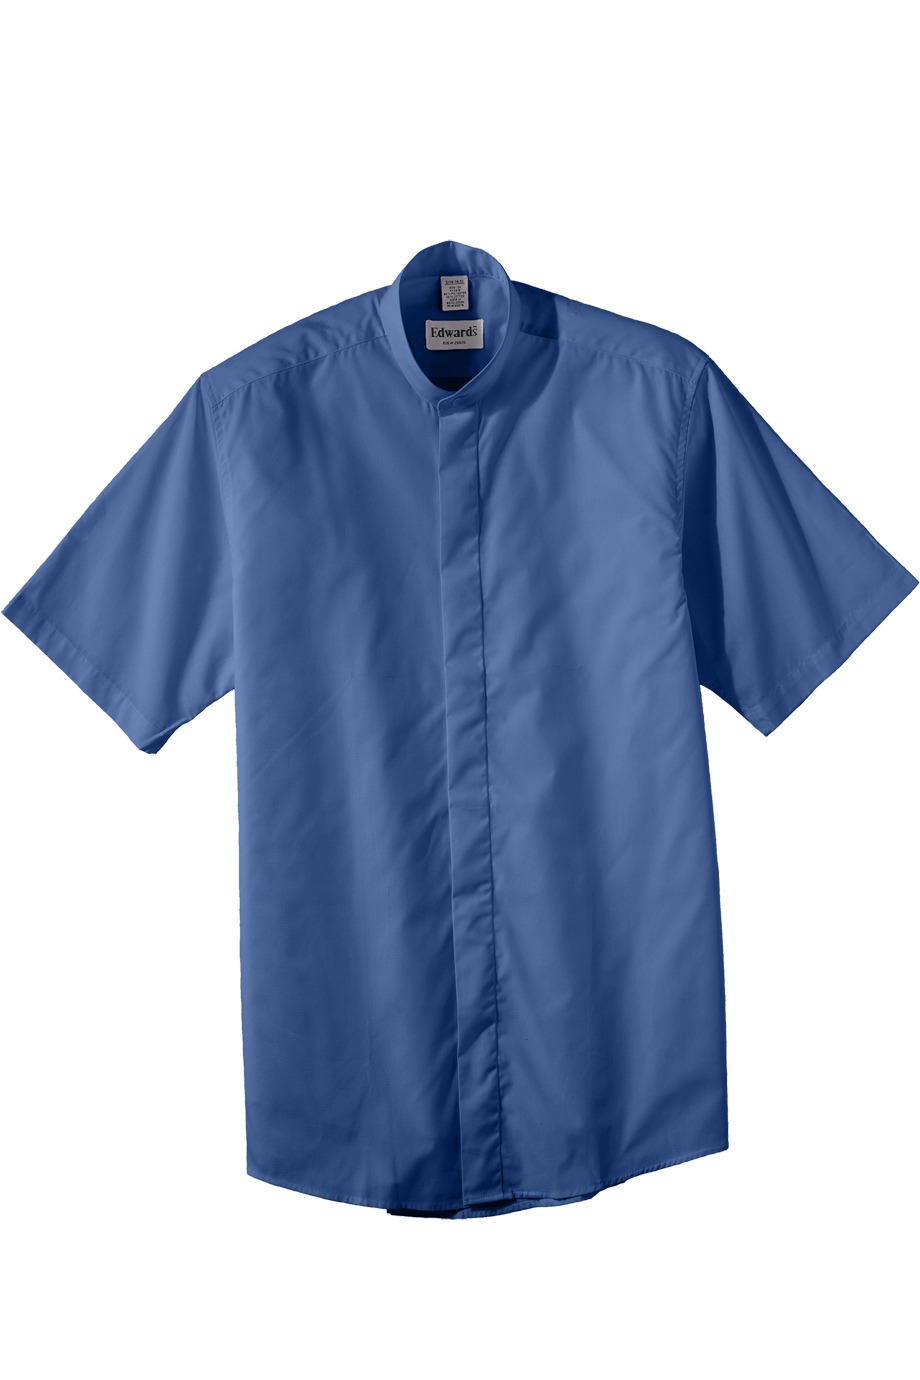 Edwards Garment 1346 - Men's Short Sleeve Banded Collar Shirt